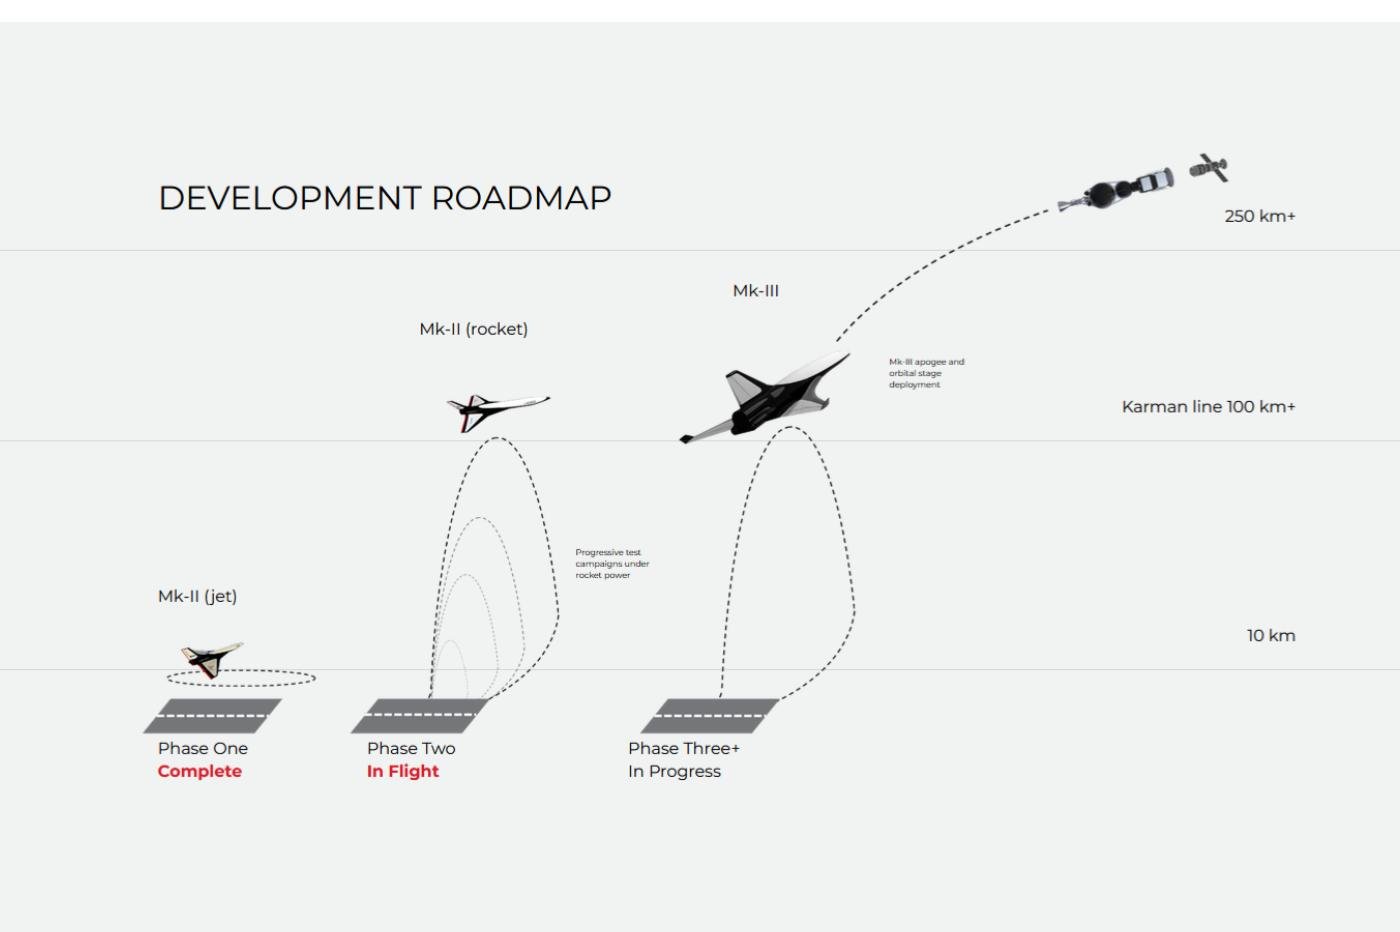 La roadmap de Dawn Aerospace